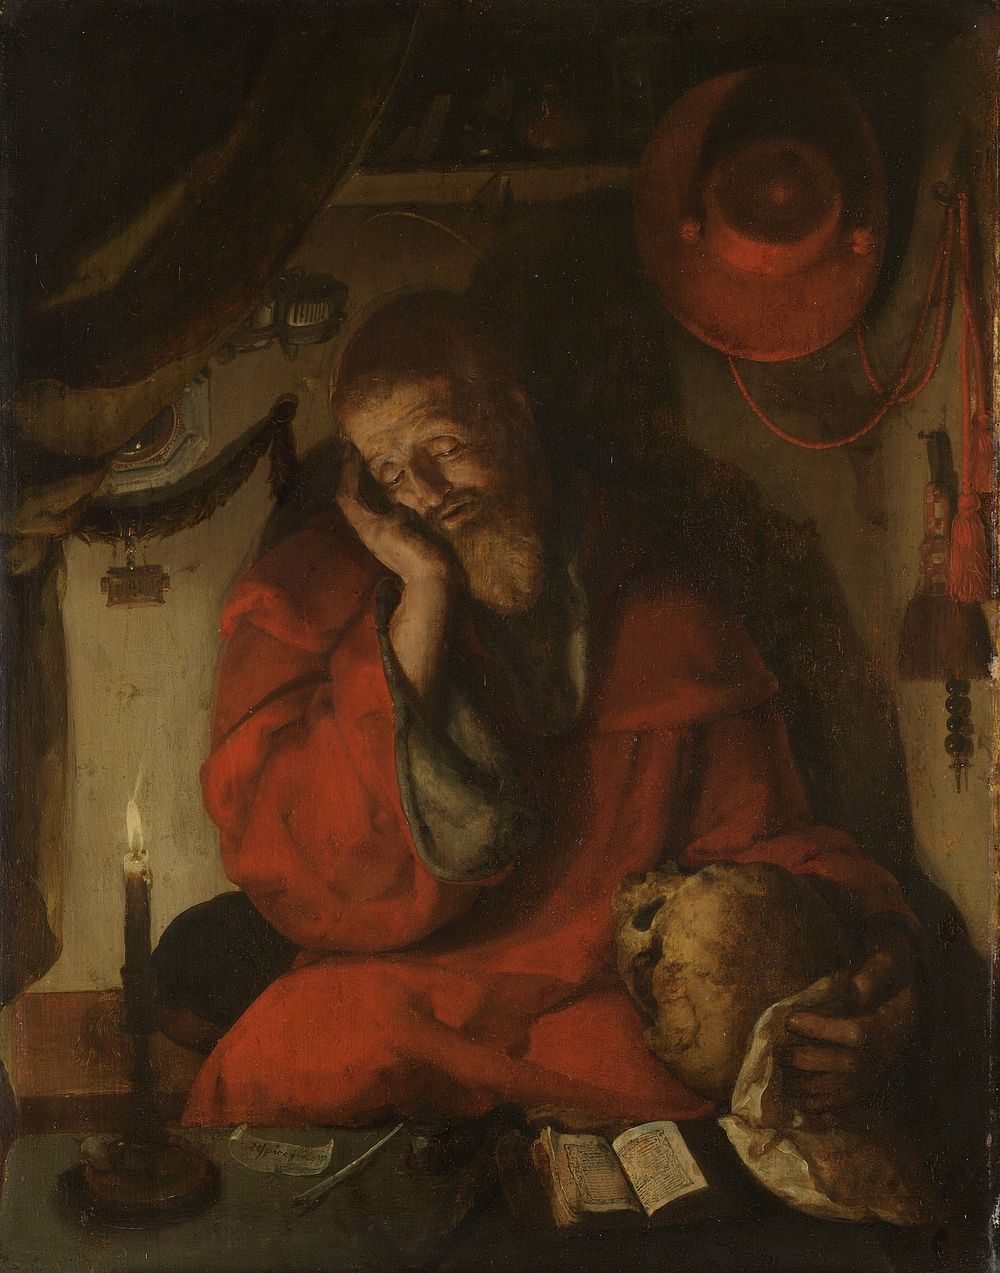 Saint Jerome in his Study by Candlelight (c. 1520 - c. 1530) by Aertgen Claesz van Leyden and Jan Cornelisz Vermeyen